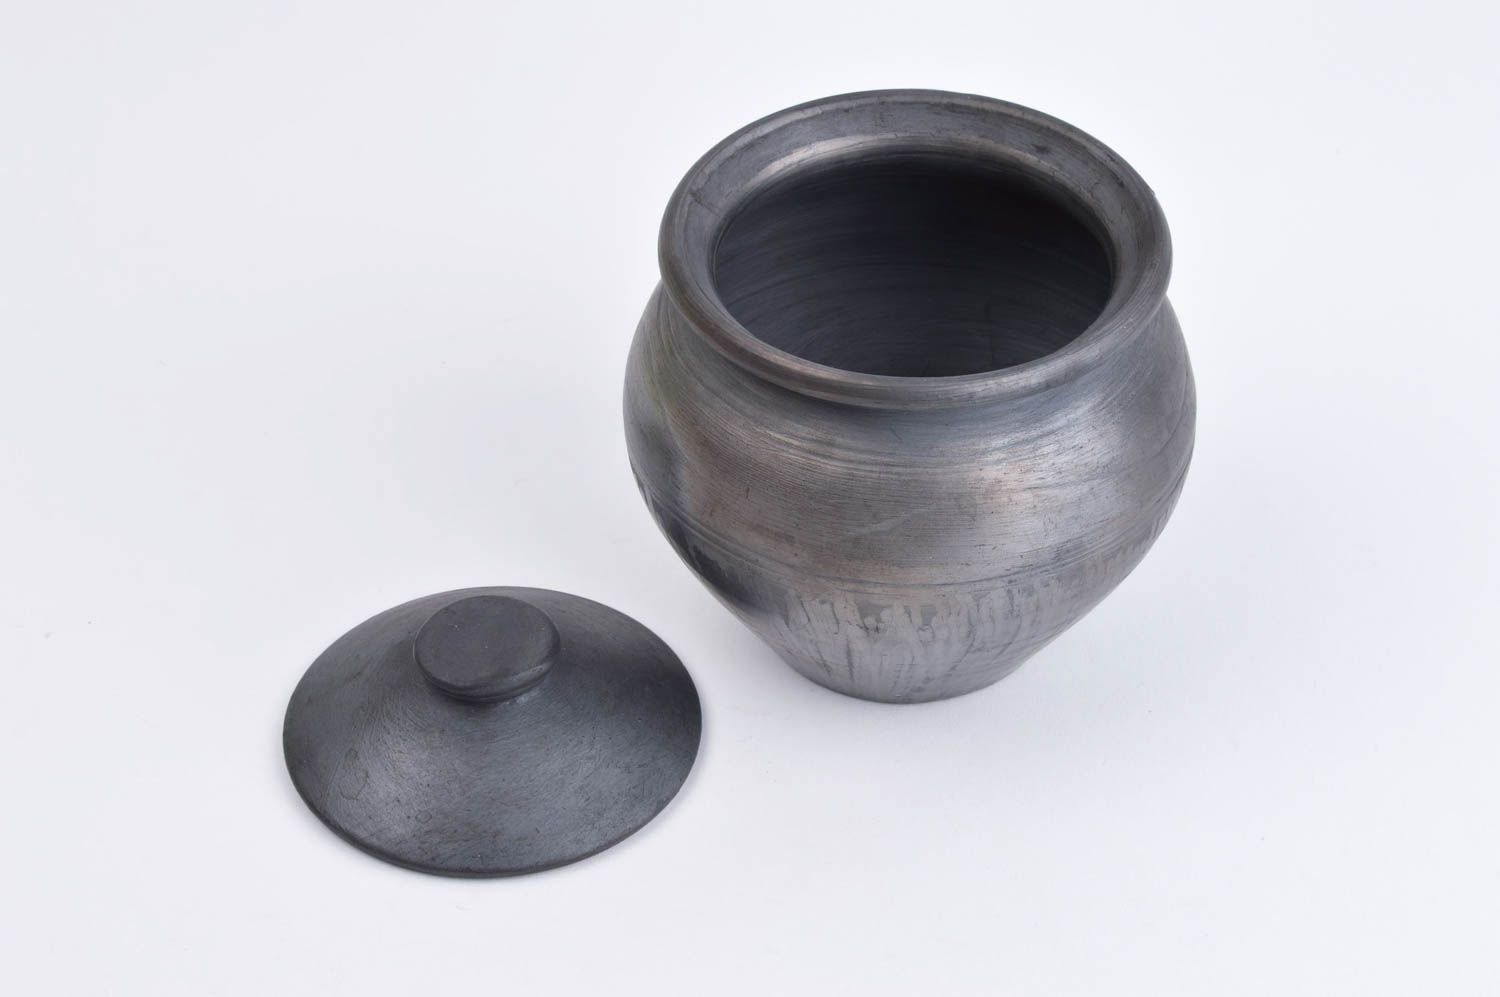 Handmade ceramic pot pottery works kitchen supplies ceramic cookware ideas photo 3